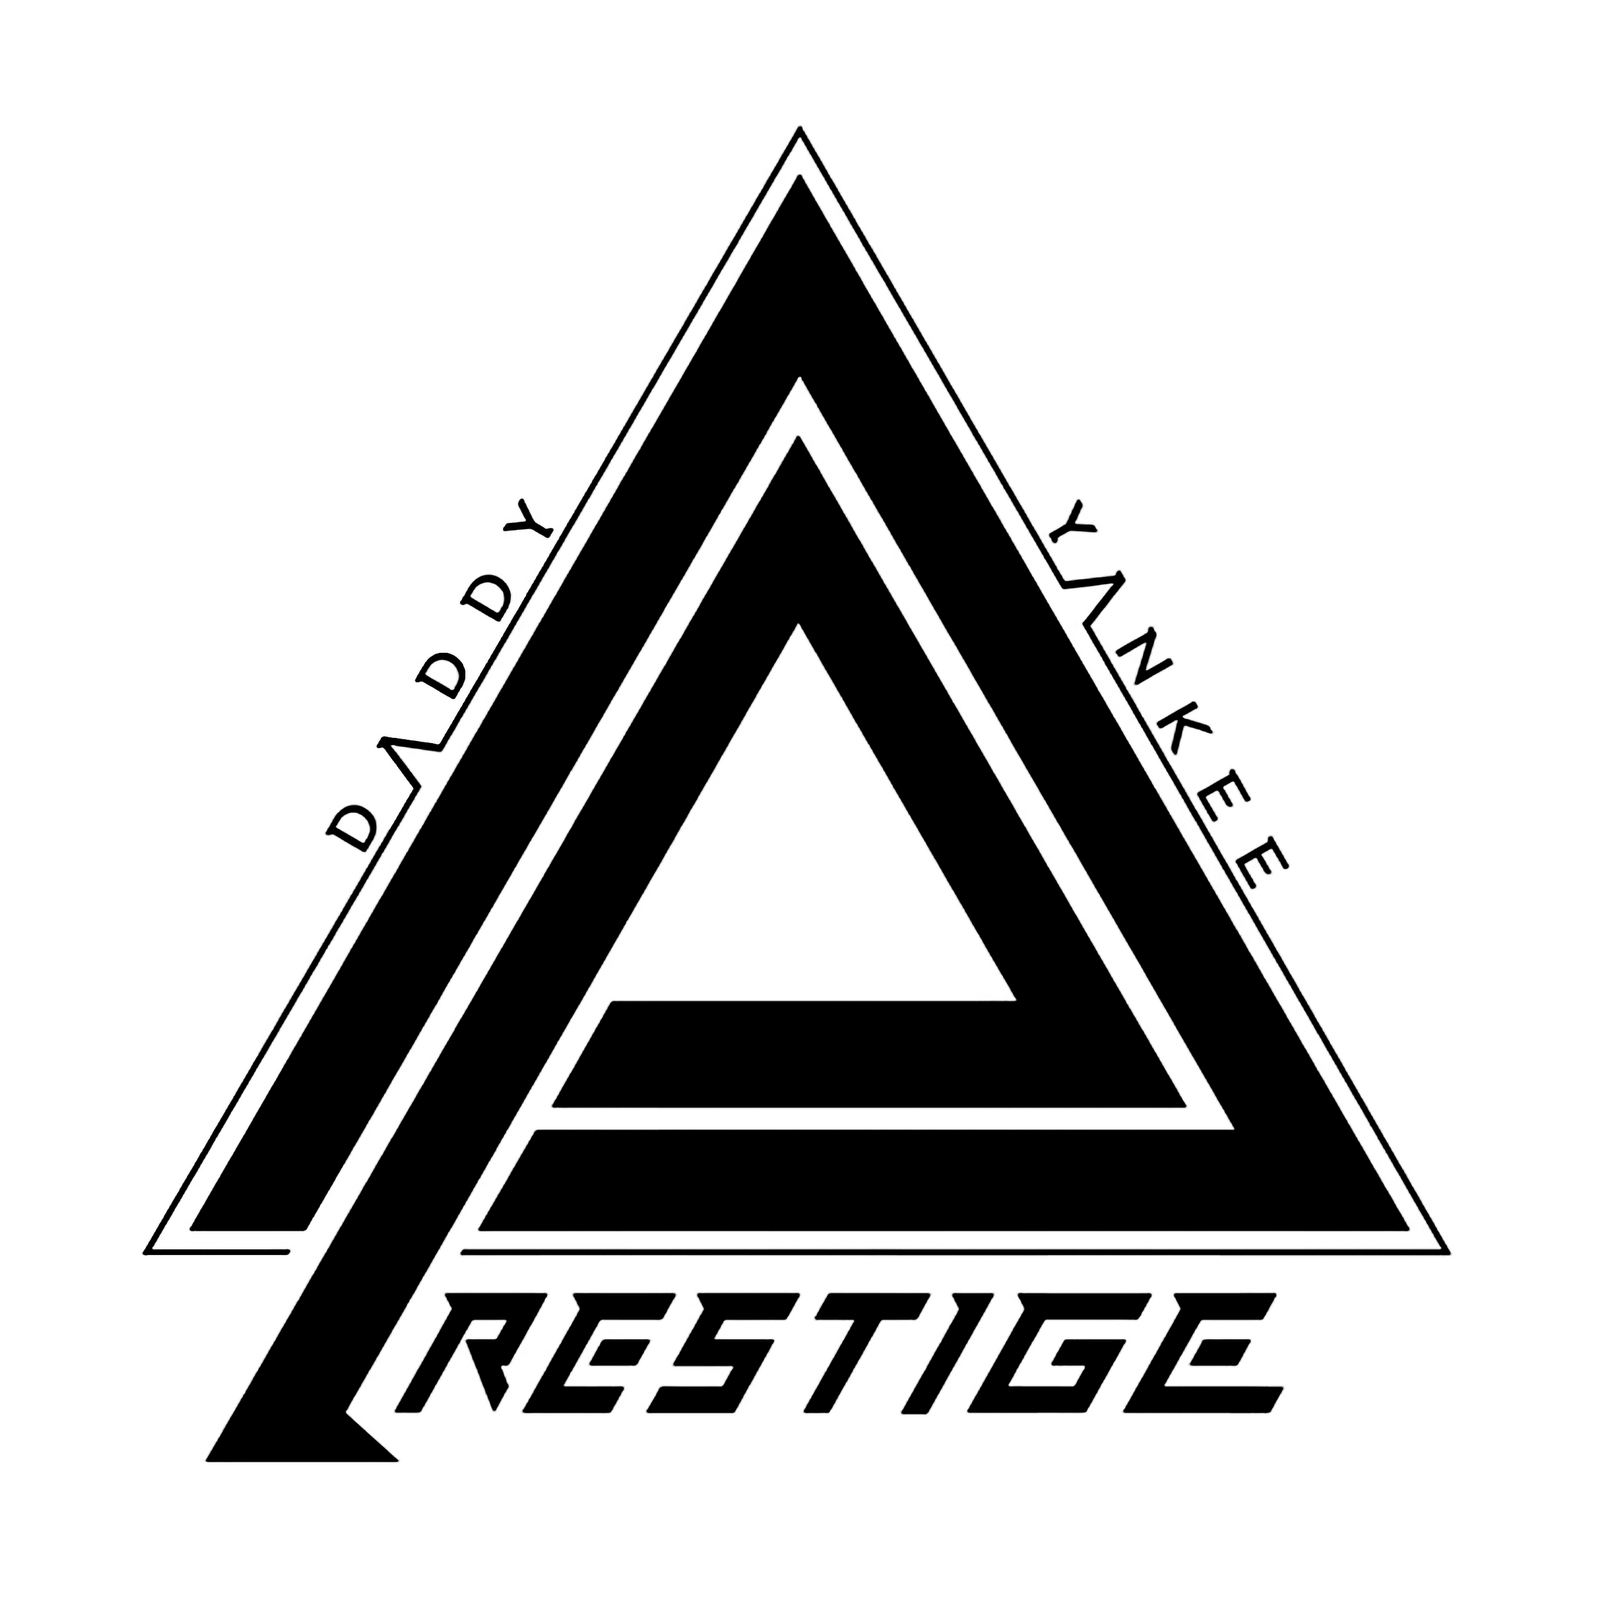 http://2.bp.blogspot.com/-KG_Vuyz9O3U/UJCIBuvWZSI/AAAAAAAAAG4/CElMsQJLiWA/s1600/Prestige+Logo+Negro.png